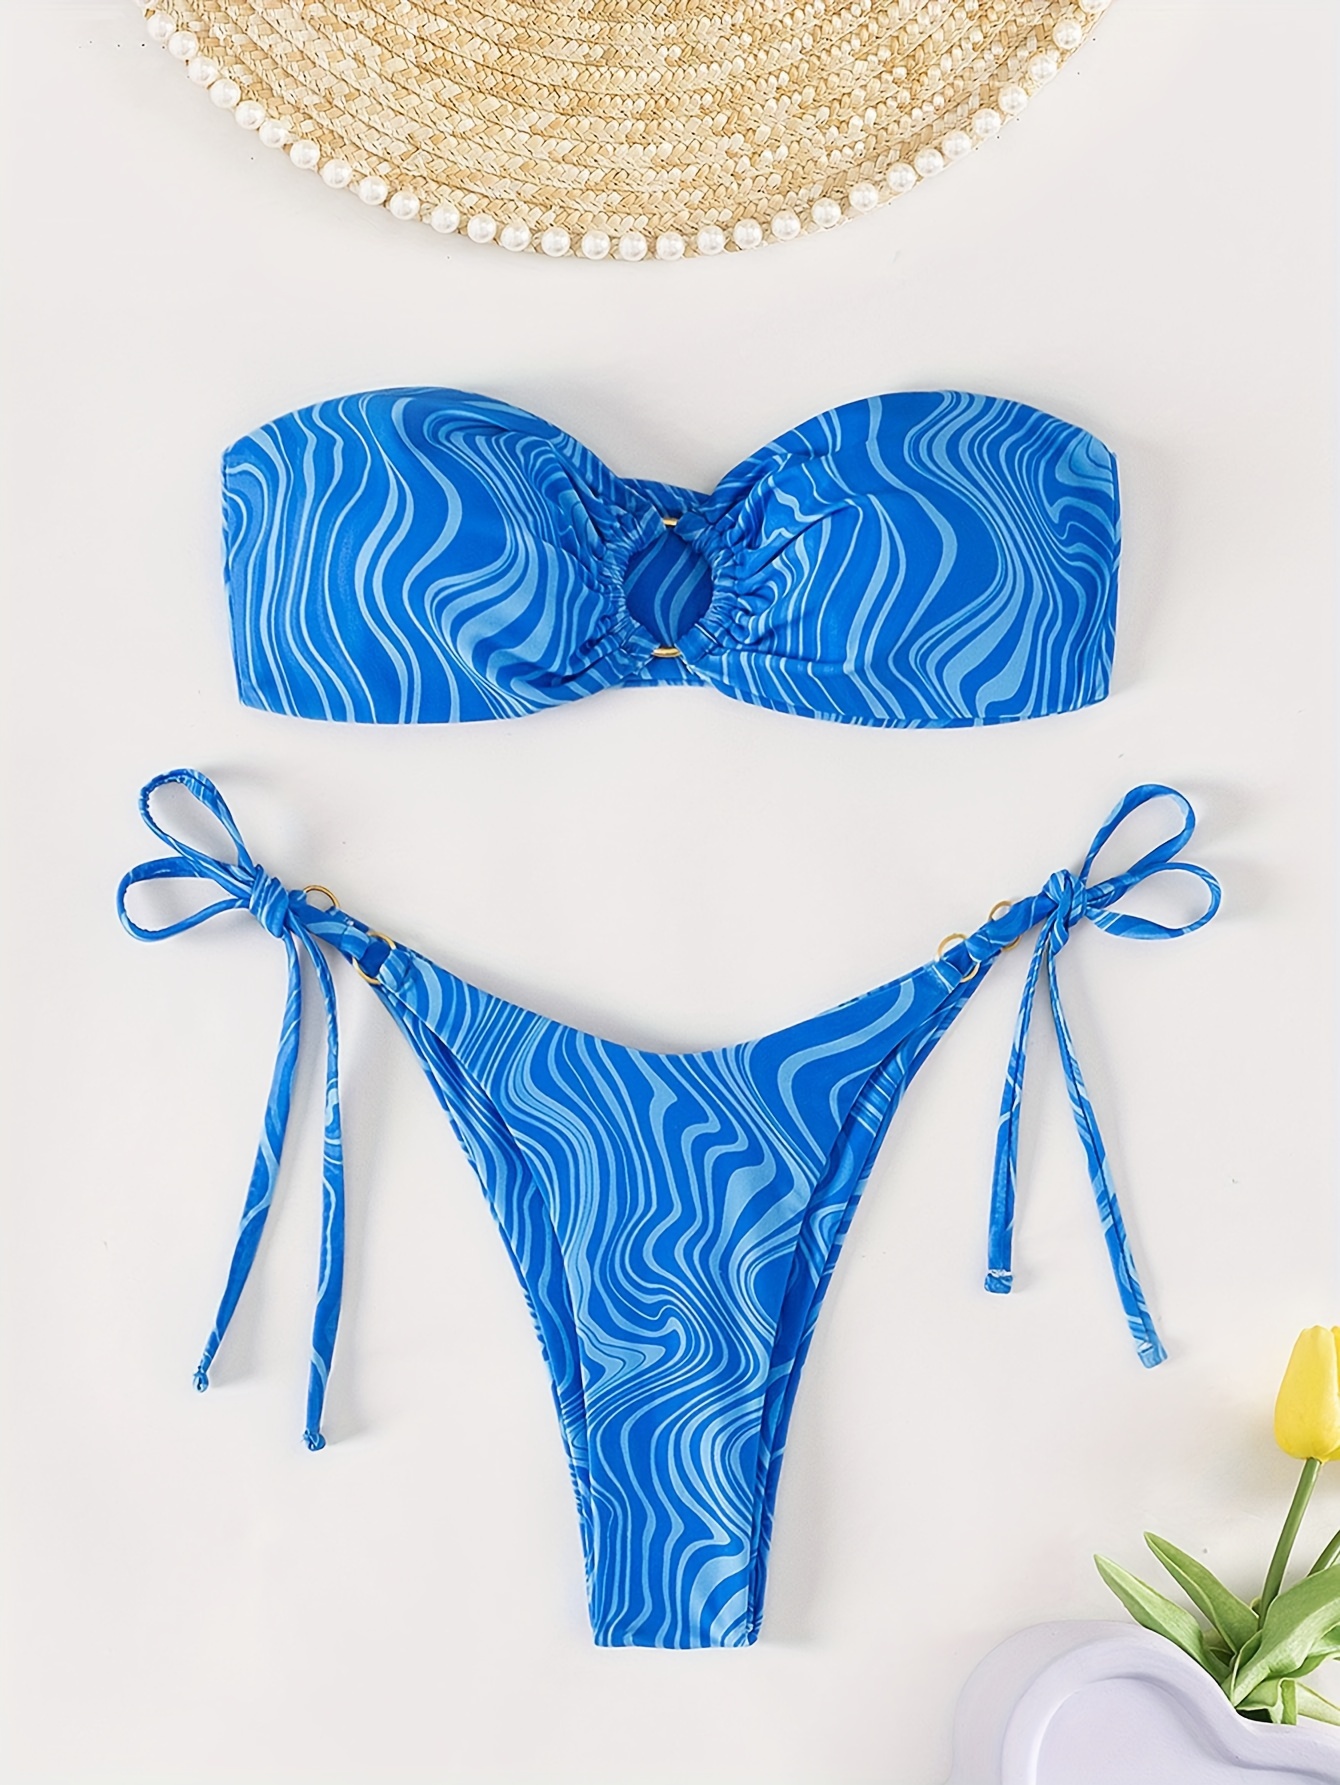 Blue Stripe Thong Sleeve Bikini Set For Women Short Sleeve Tank Swimsuit  2020 Beach Swimwear With Hollow Out Design From Blacktiger, $18.96